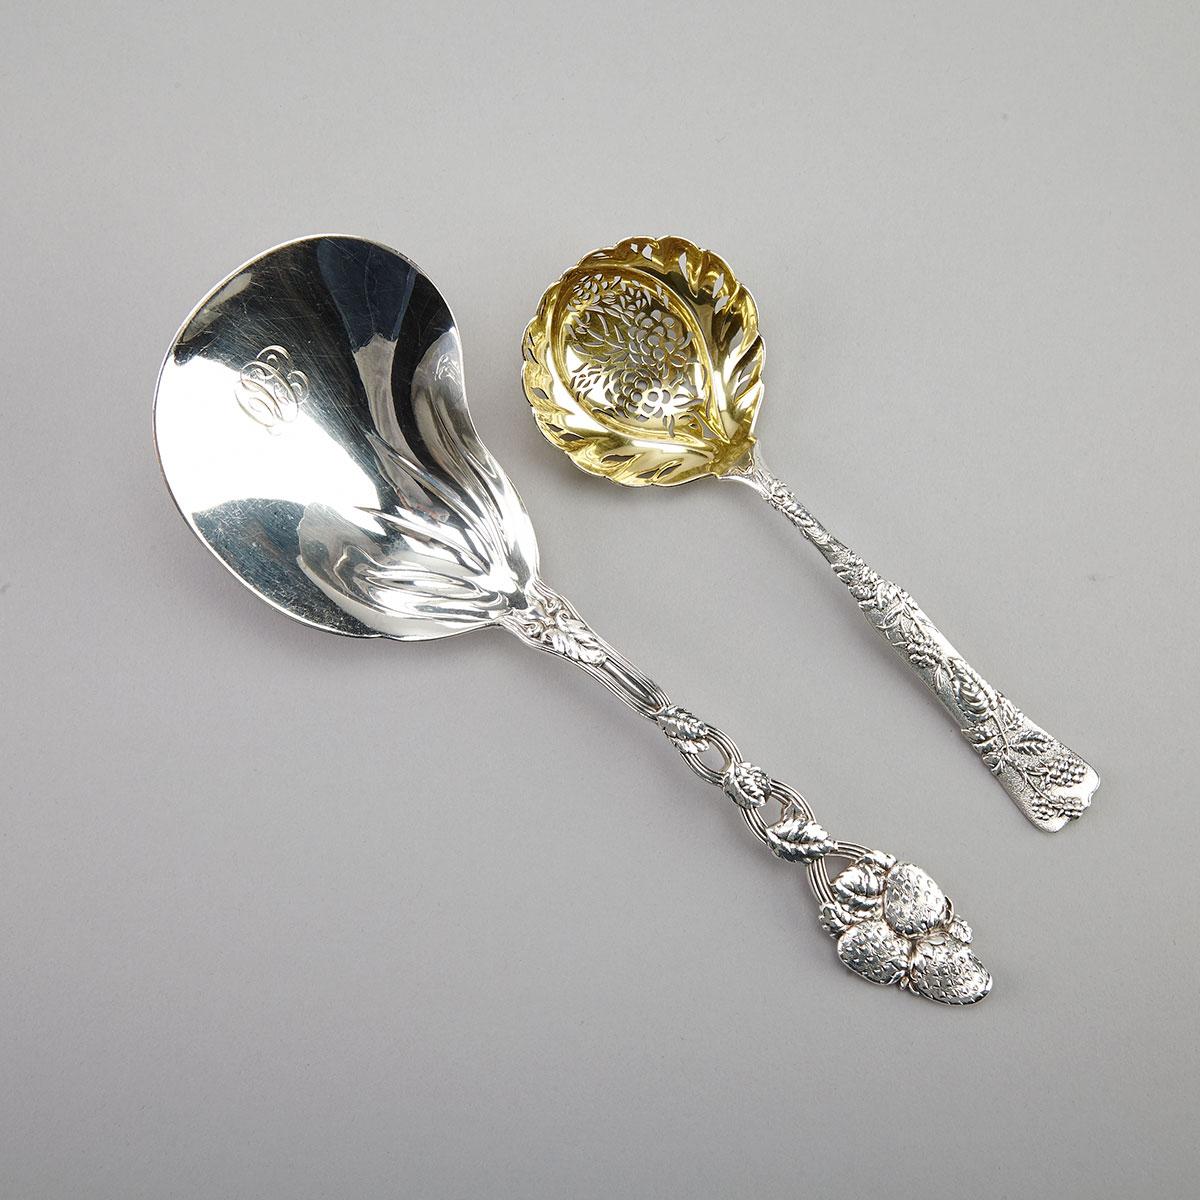 American Silver Berry Spoon and Sugar Sifting Spoon, Tiffany & Co., New York, N.Y., c.1900